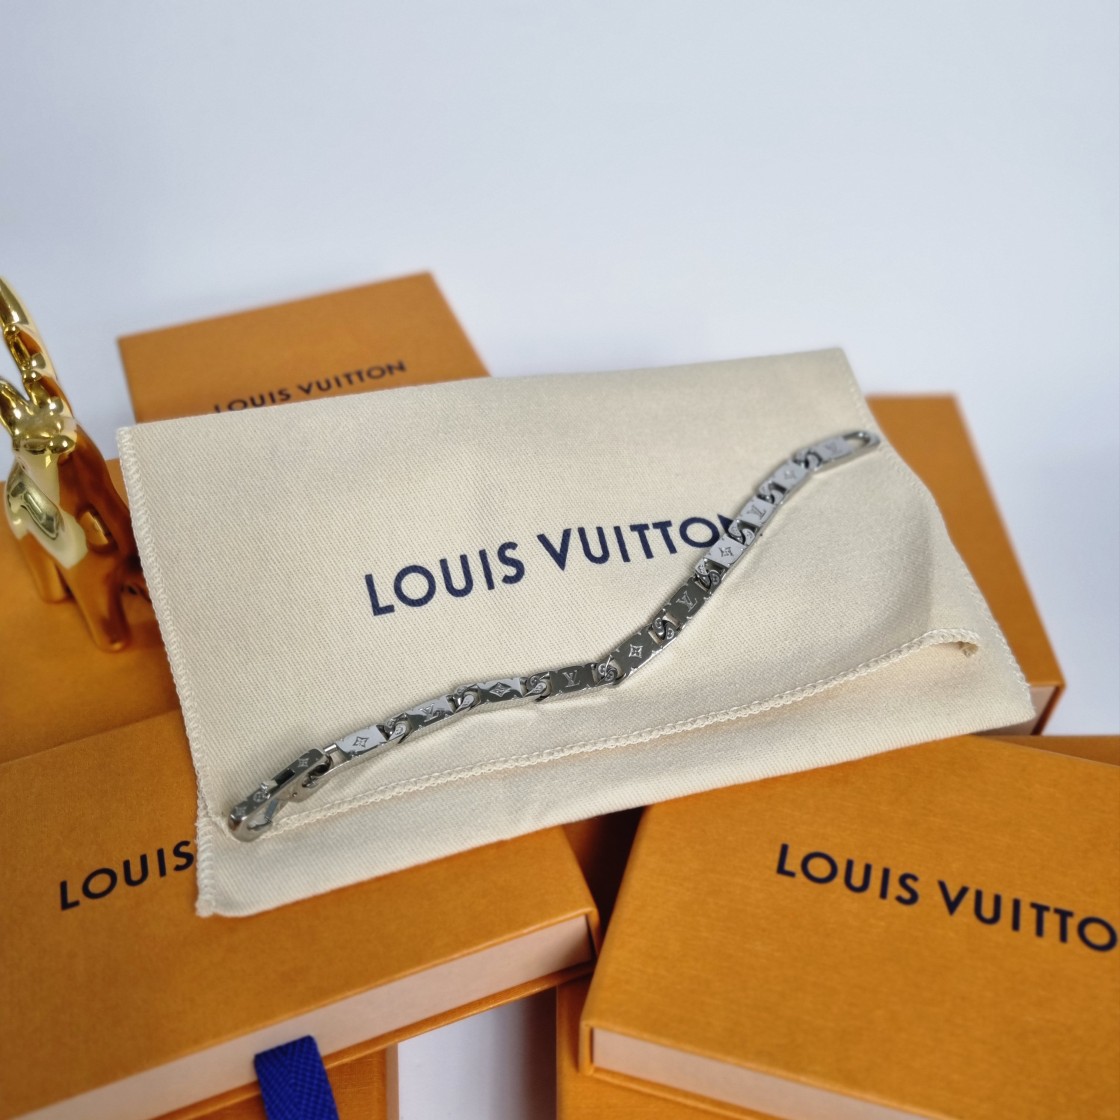 Louis Vuitton Monogram Tied Up Bracelet